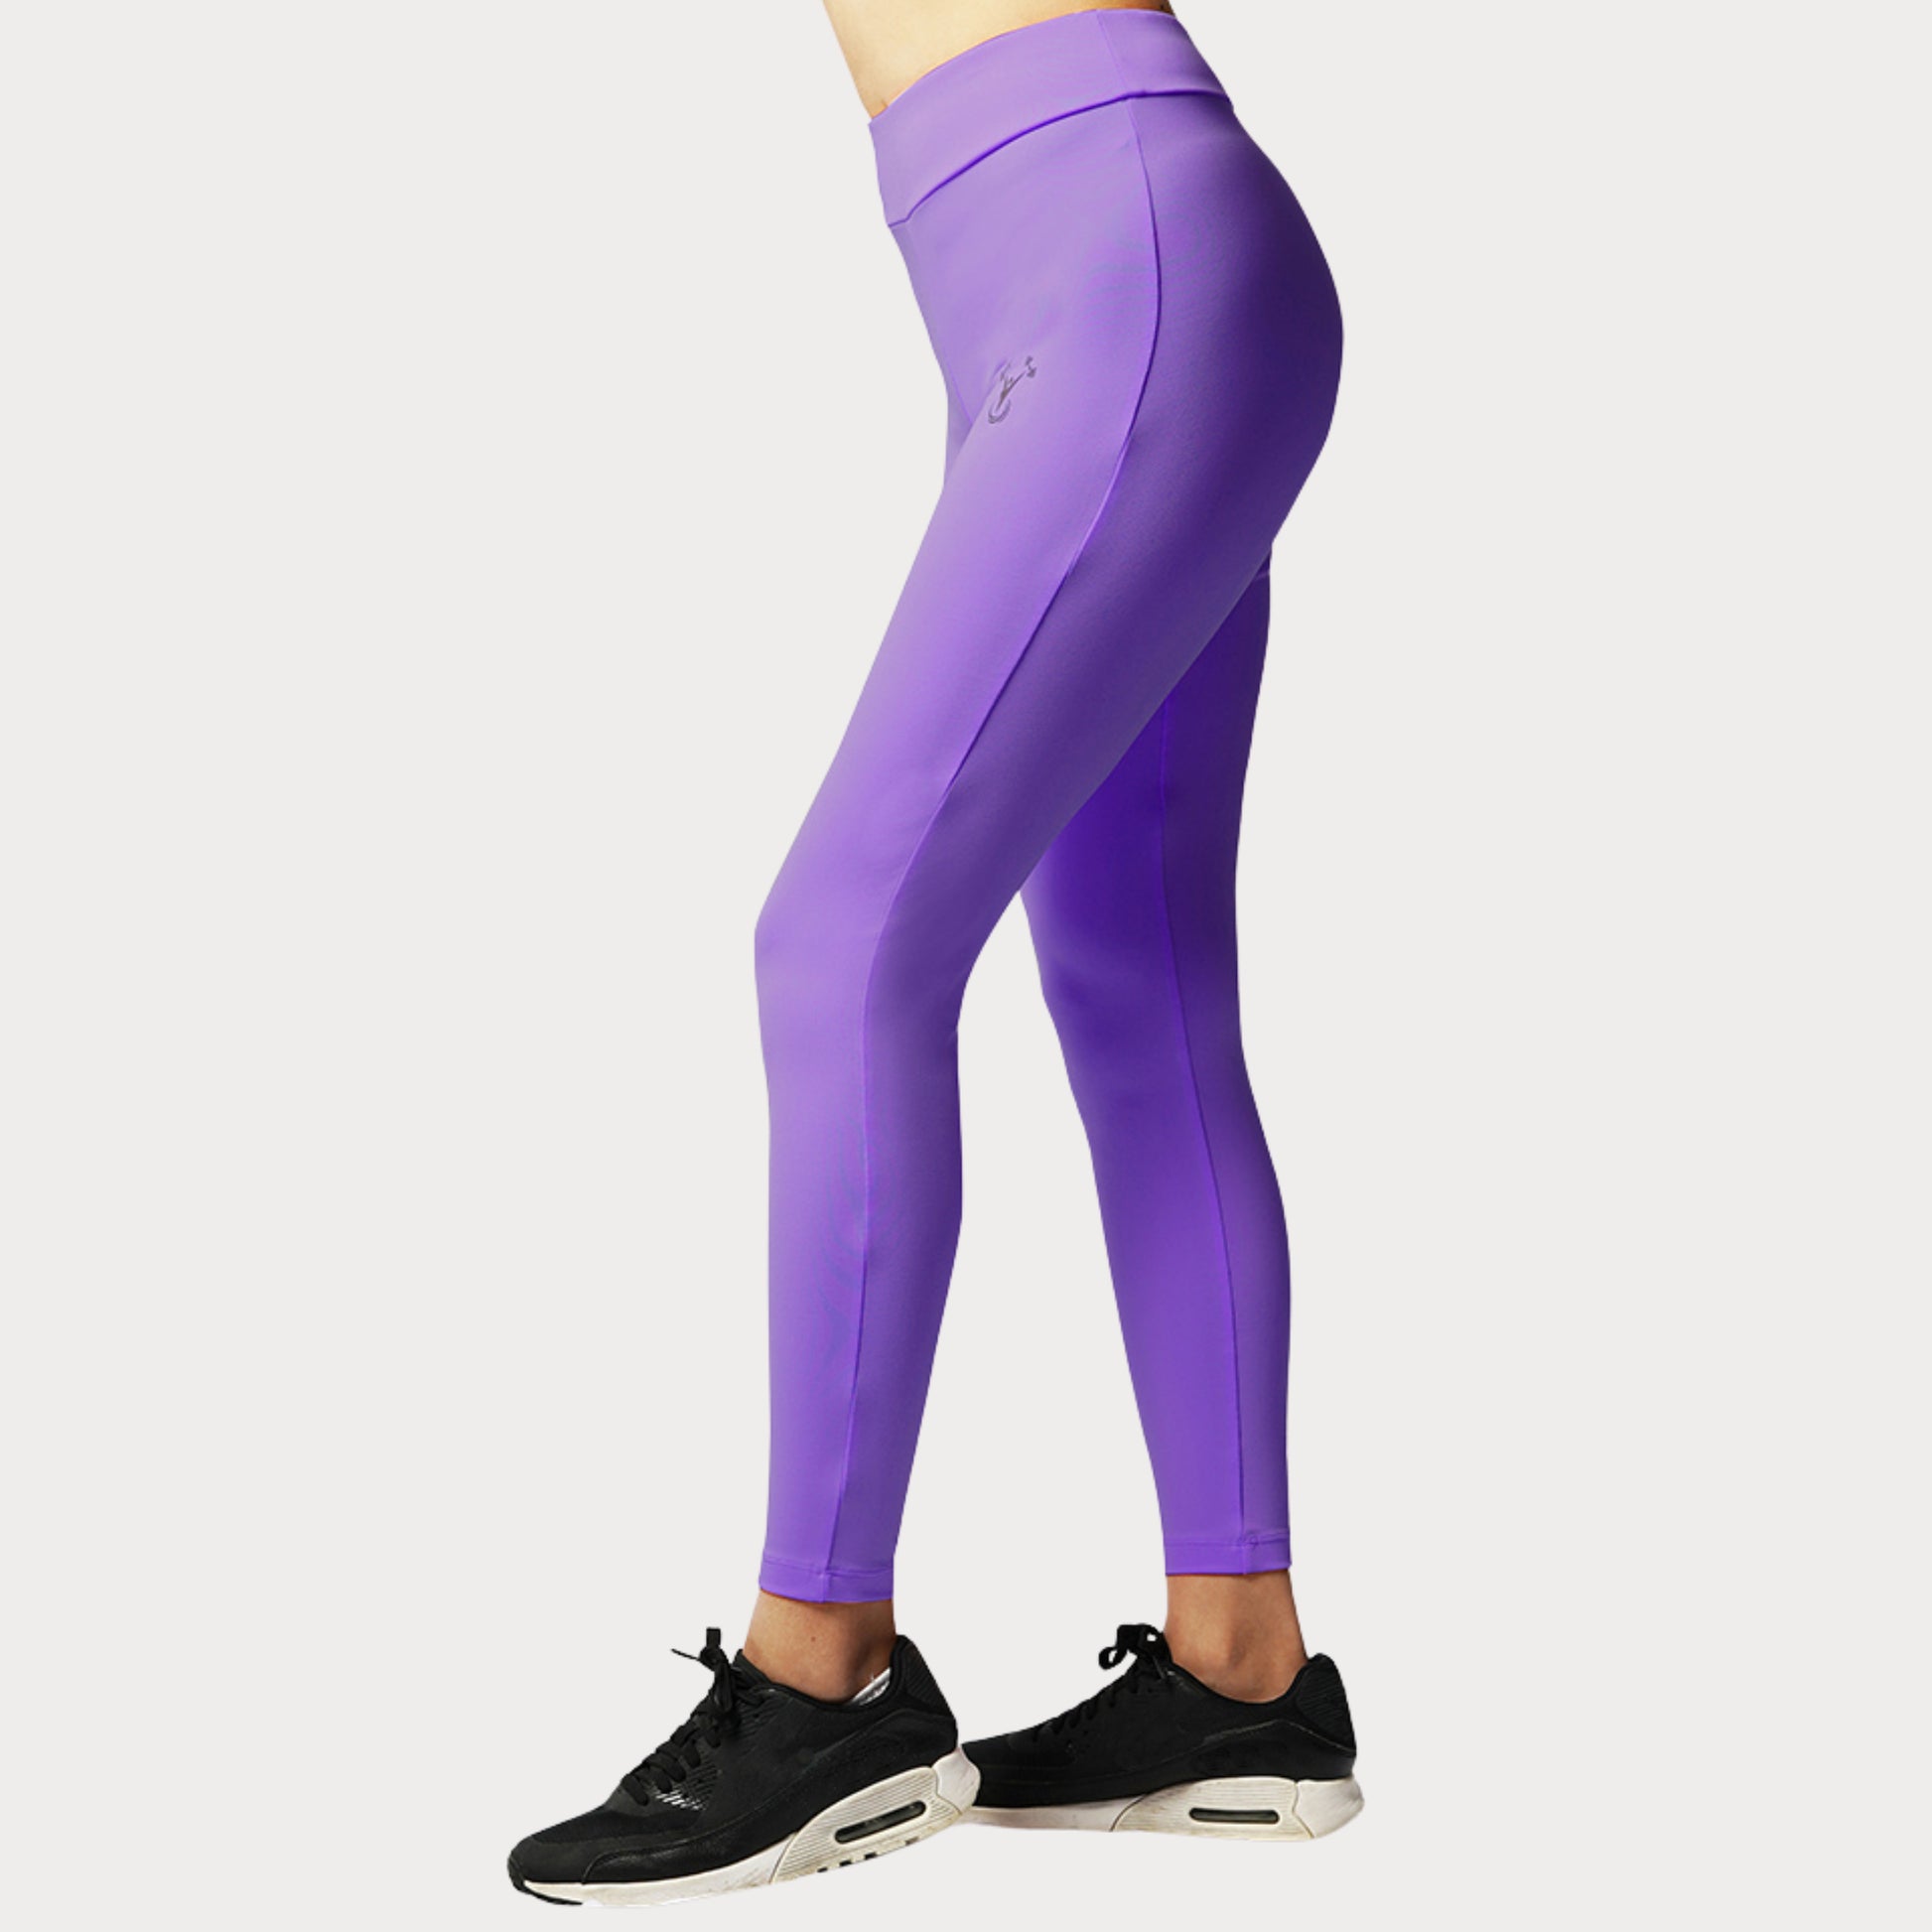 Capri & Leggings Activewear / Sportswear - Women's Essential Leggings - S / Lively Lilac - Outperformer